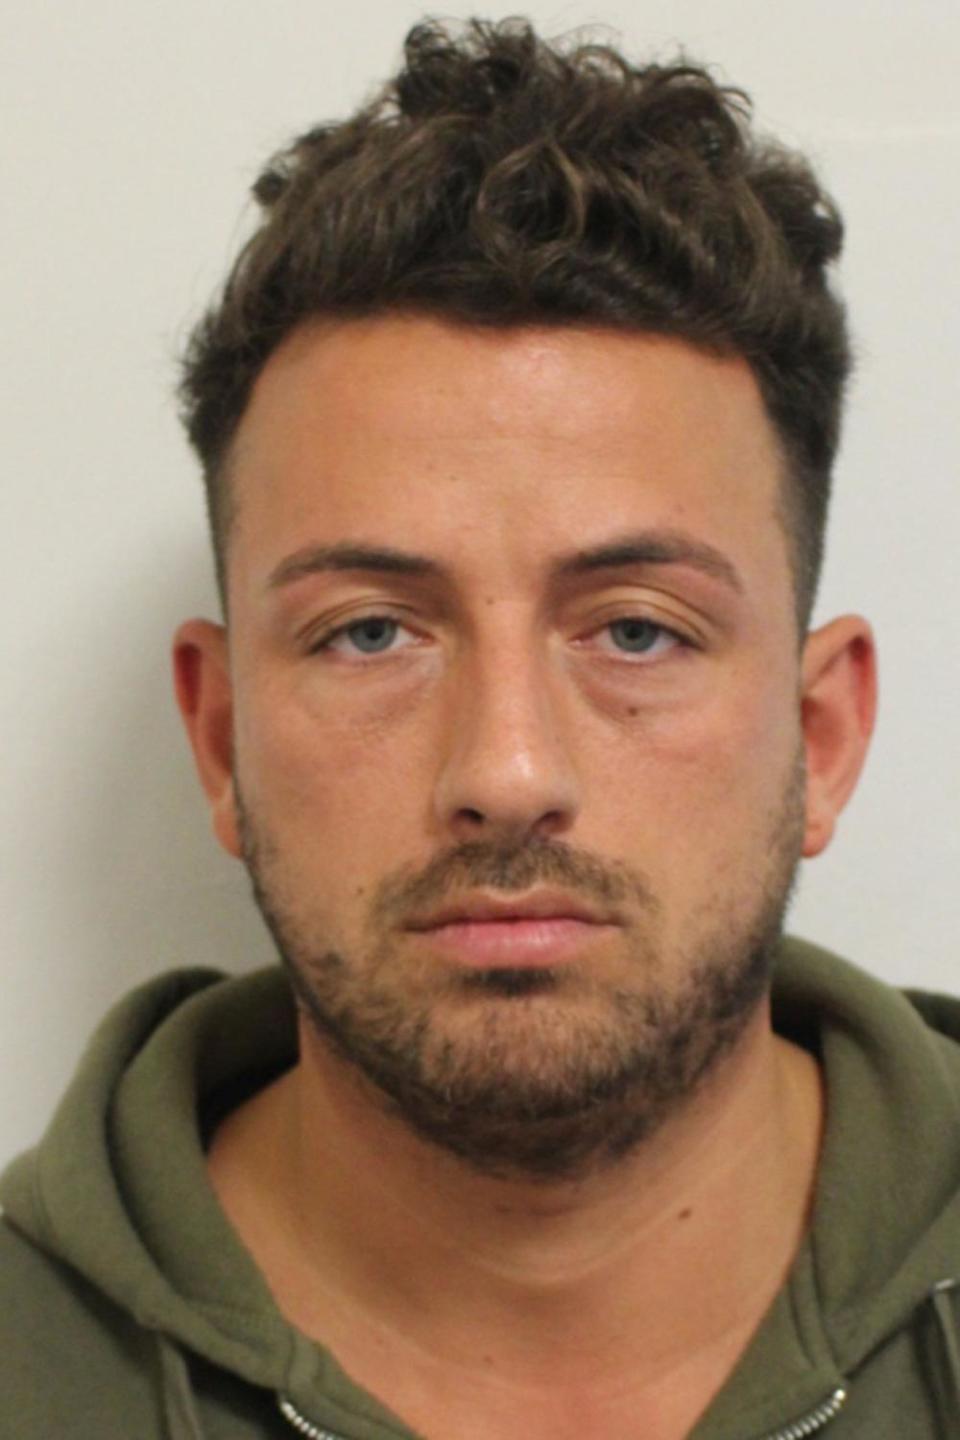 Papantoniou carried out burglaries in Hampstead, Kensington and Knightsbridge